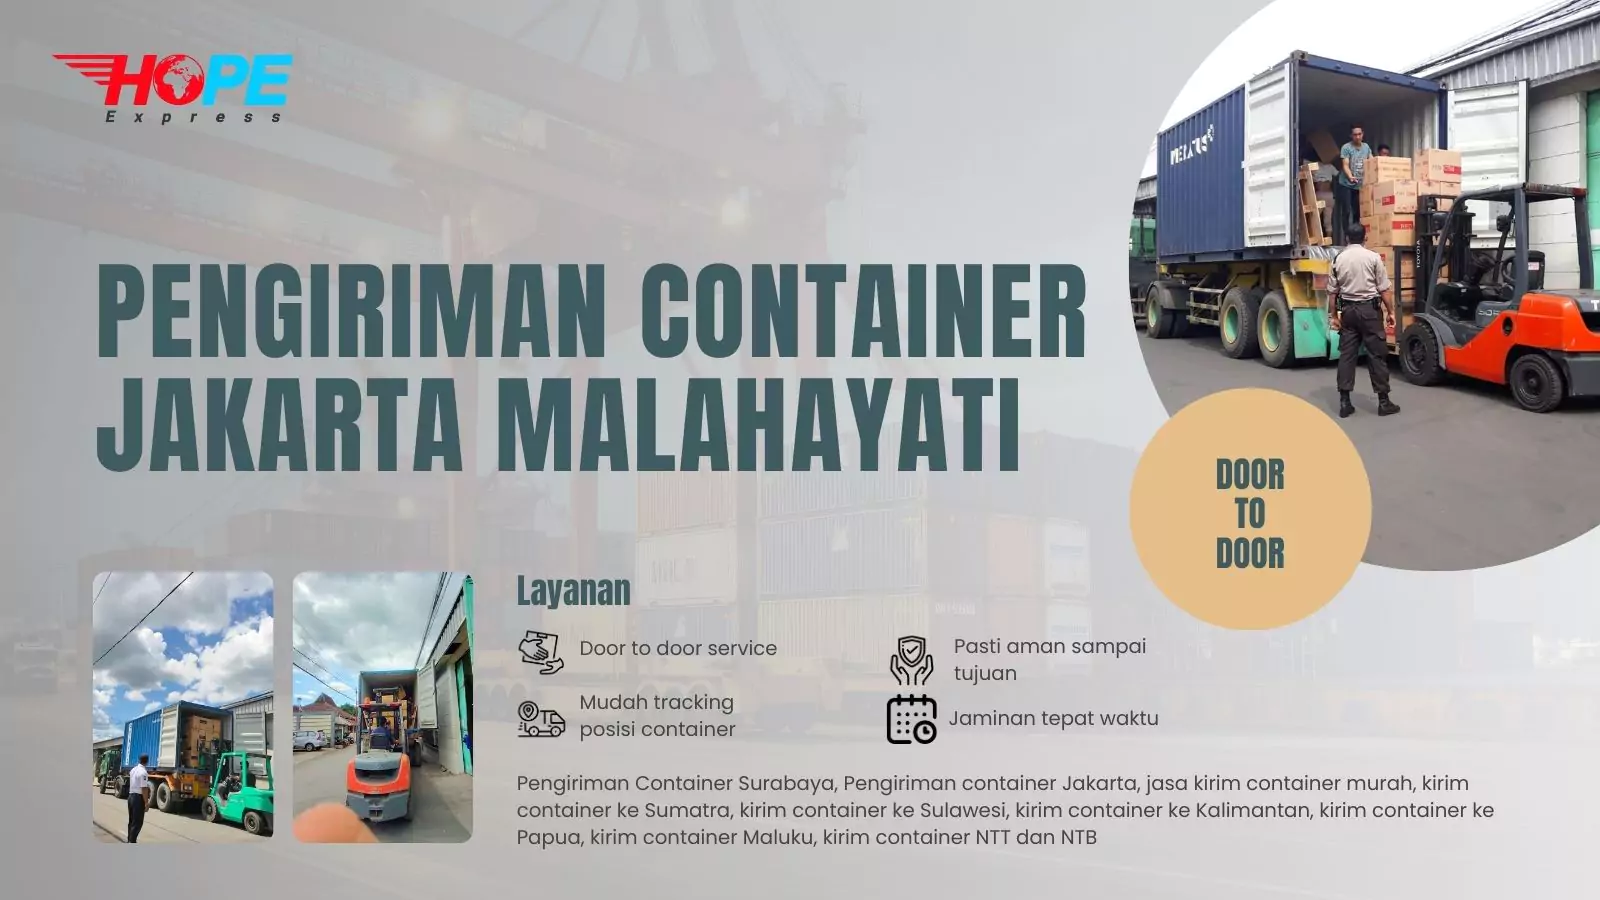 Pengiriman Container Jakarta Malahayati